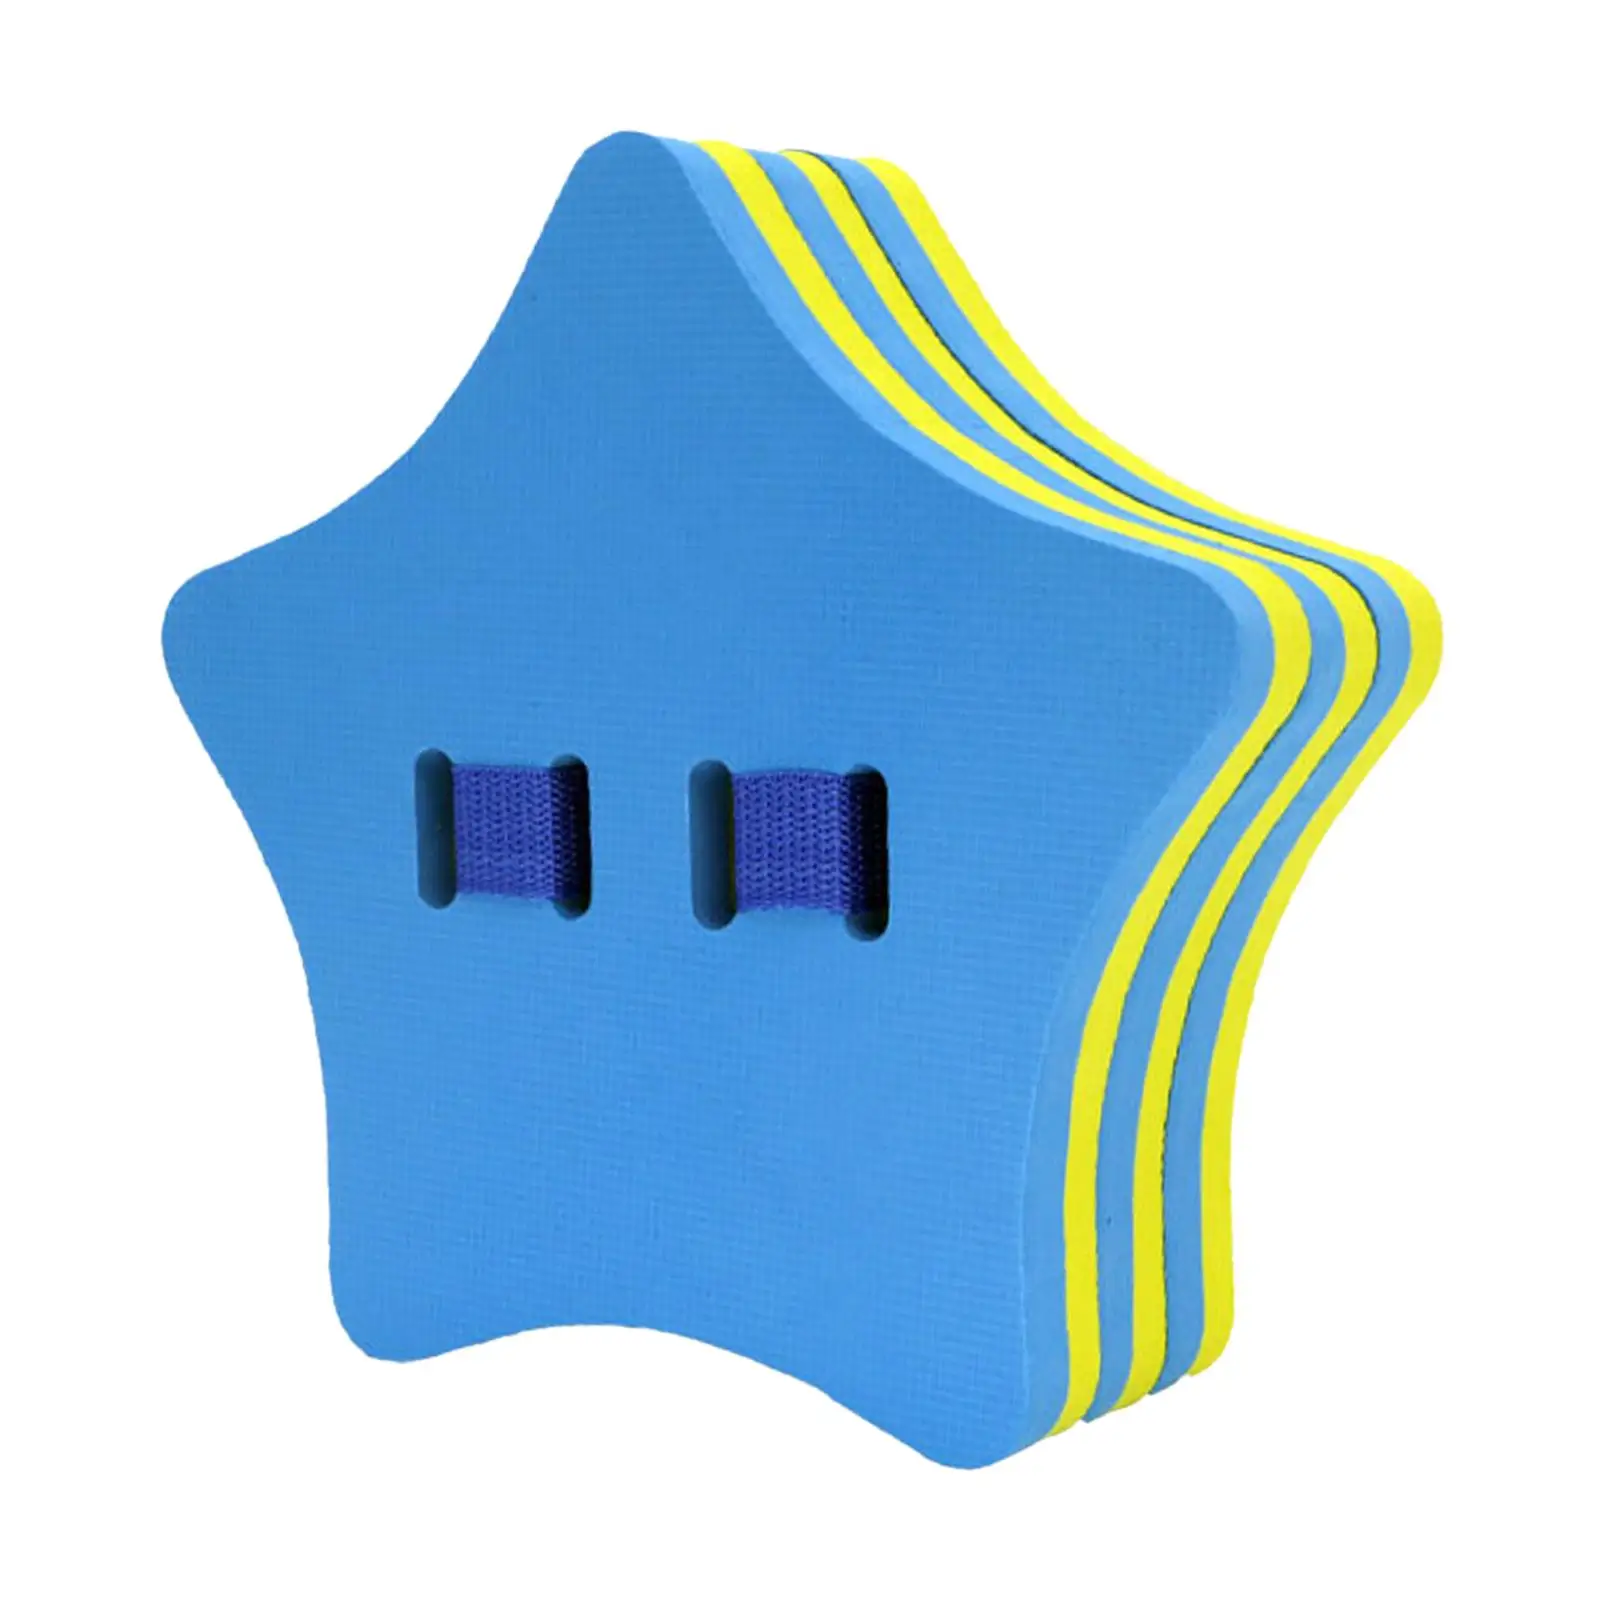 Adjustable Back foam floating Belt Waist Kick Board for Children and Adults